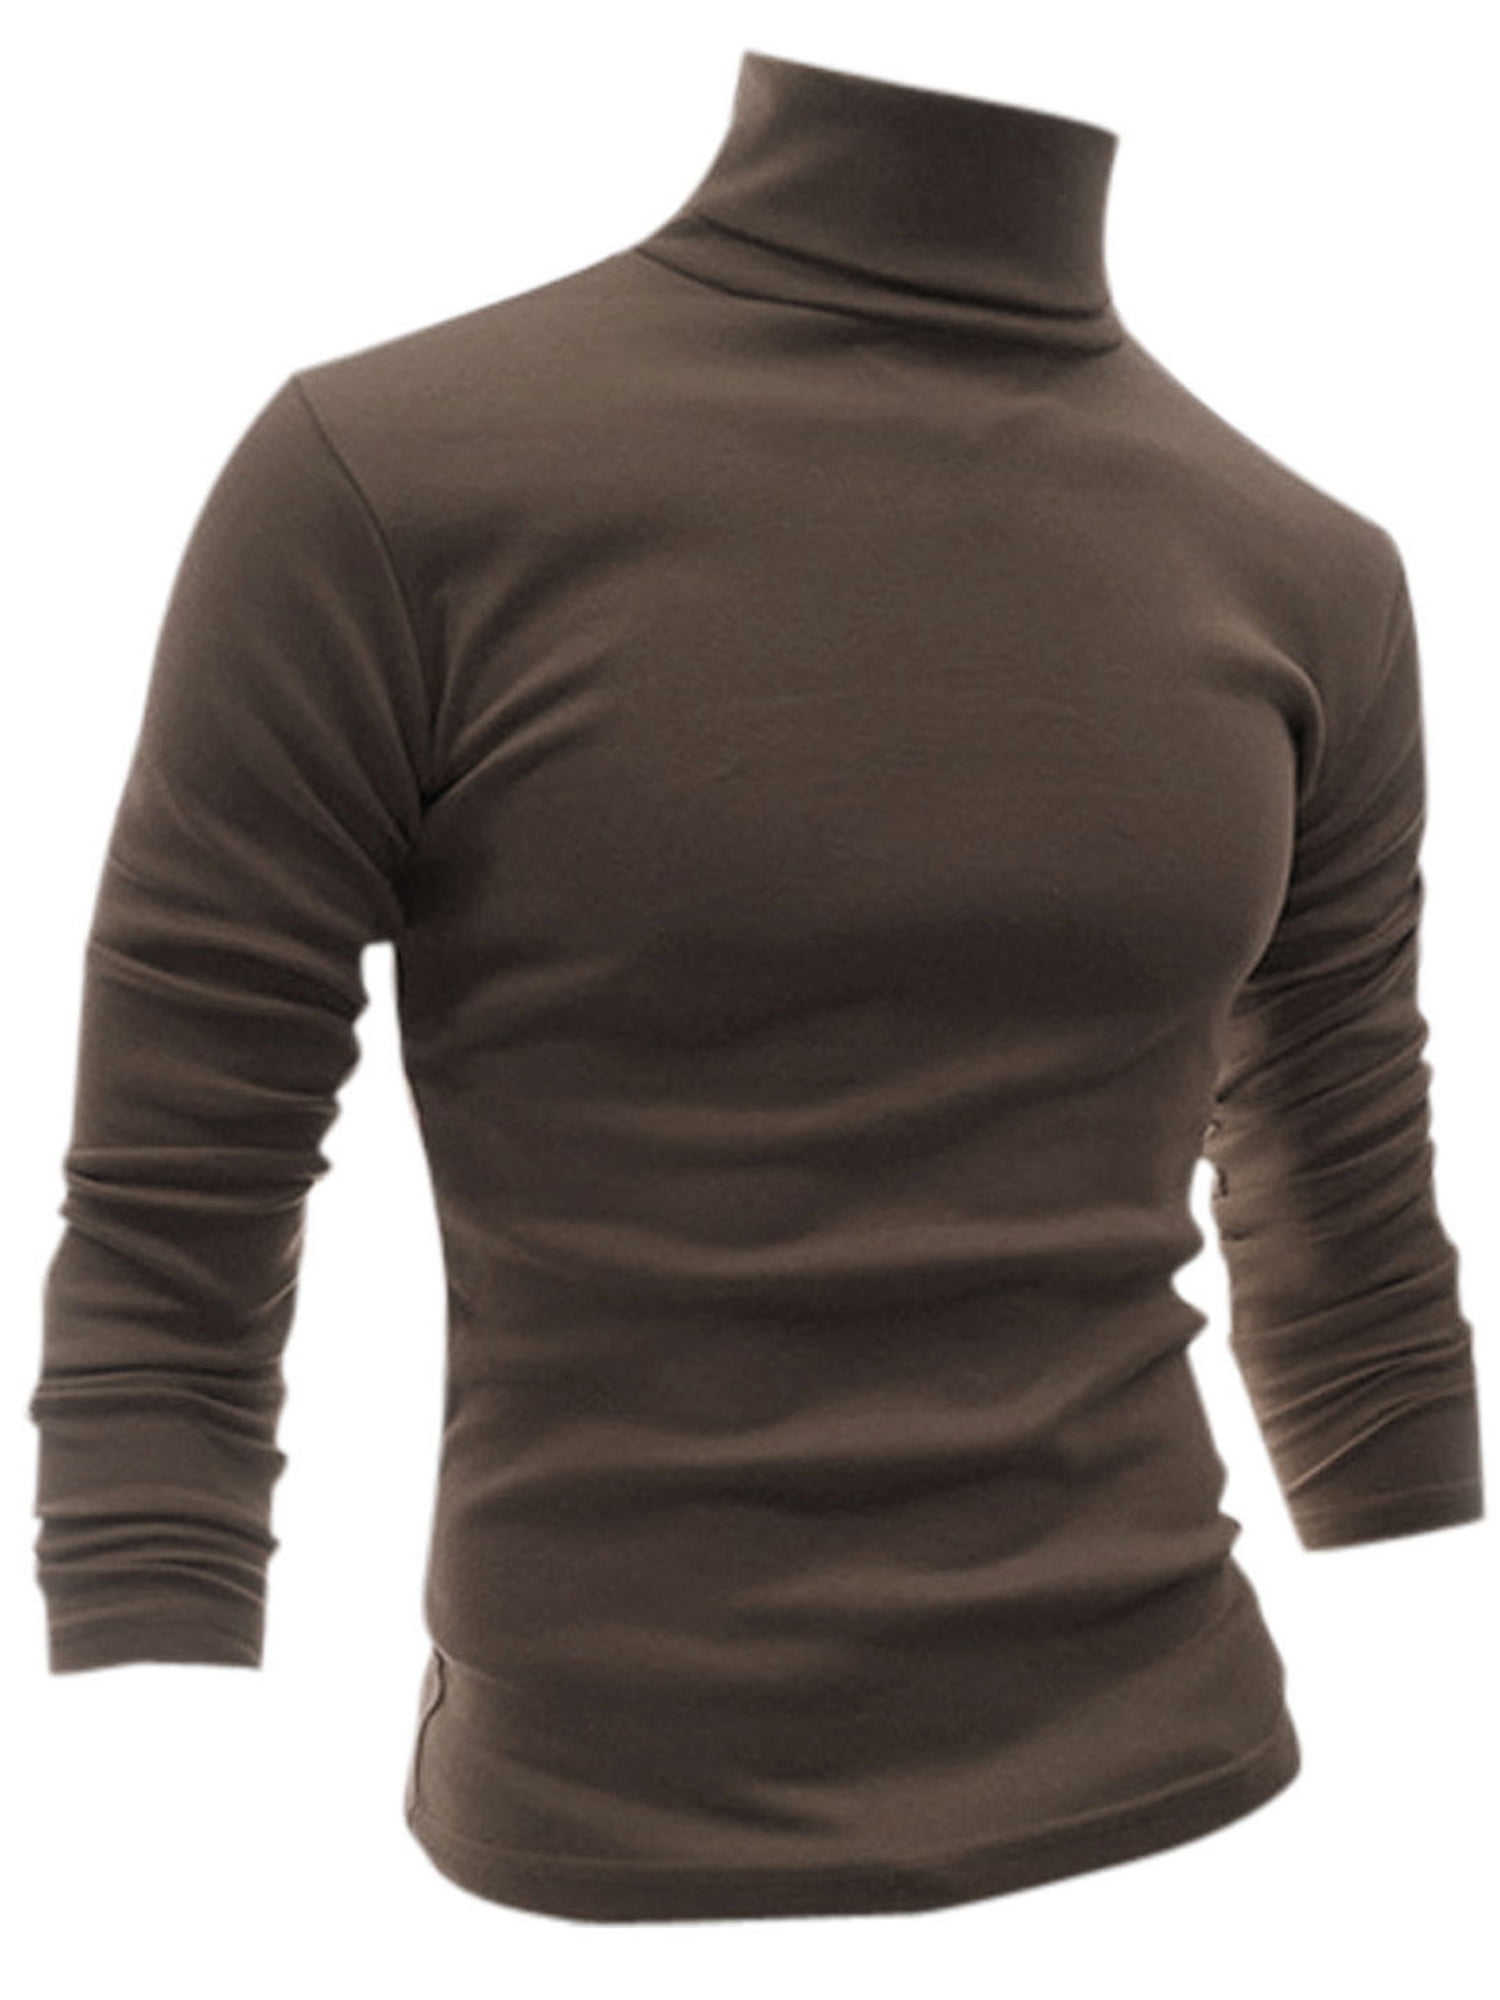 Unique Bargains Mens Slim Fit Lightweight Long Sleeve Pullover Top Turtleneck T Shirt